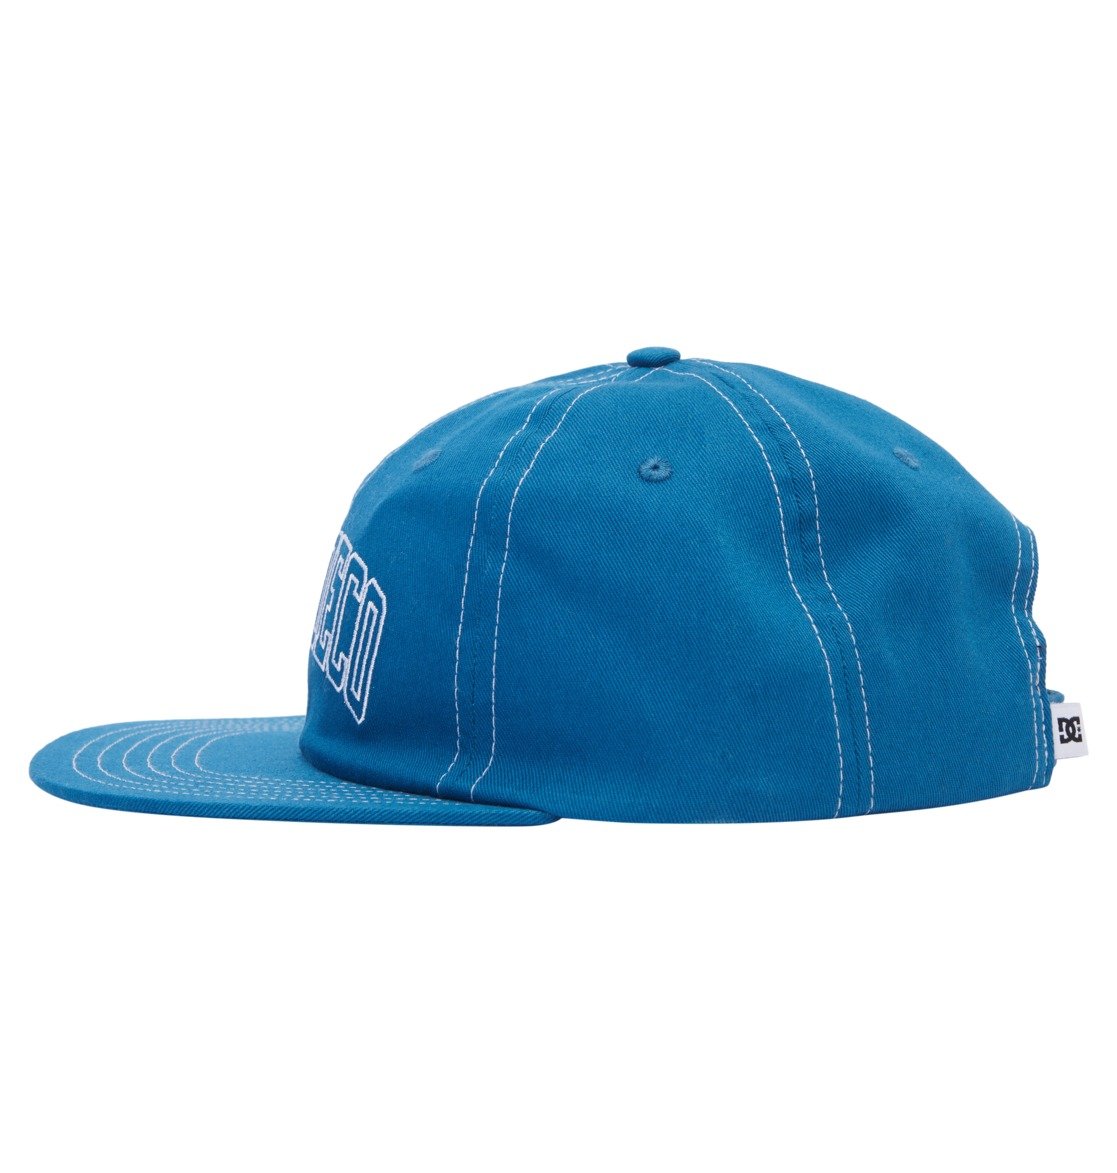 DC - VARSITY CAP - BLUE